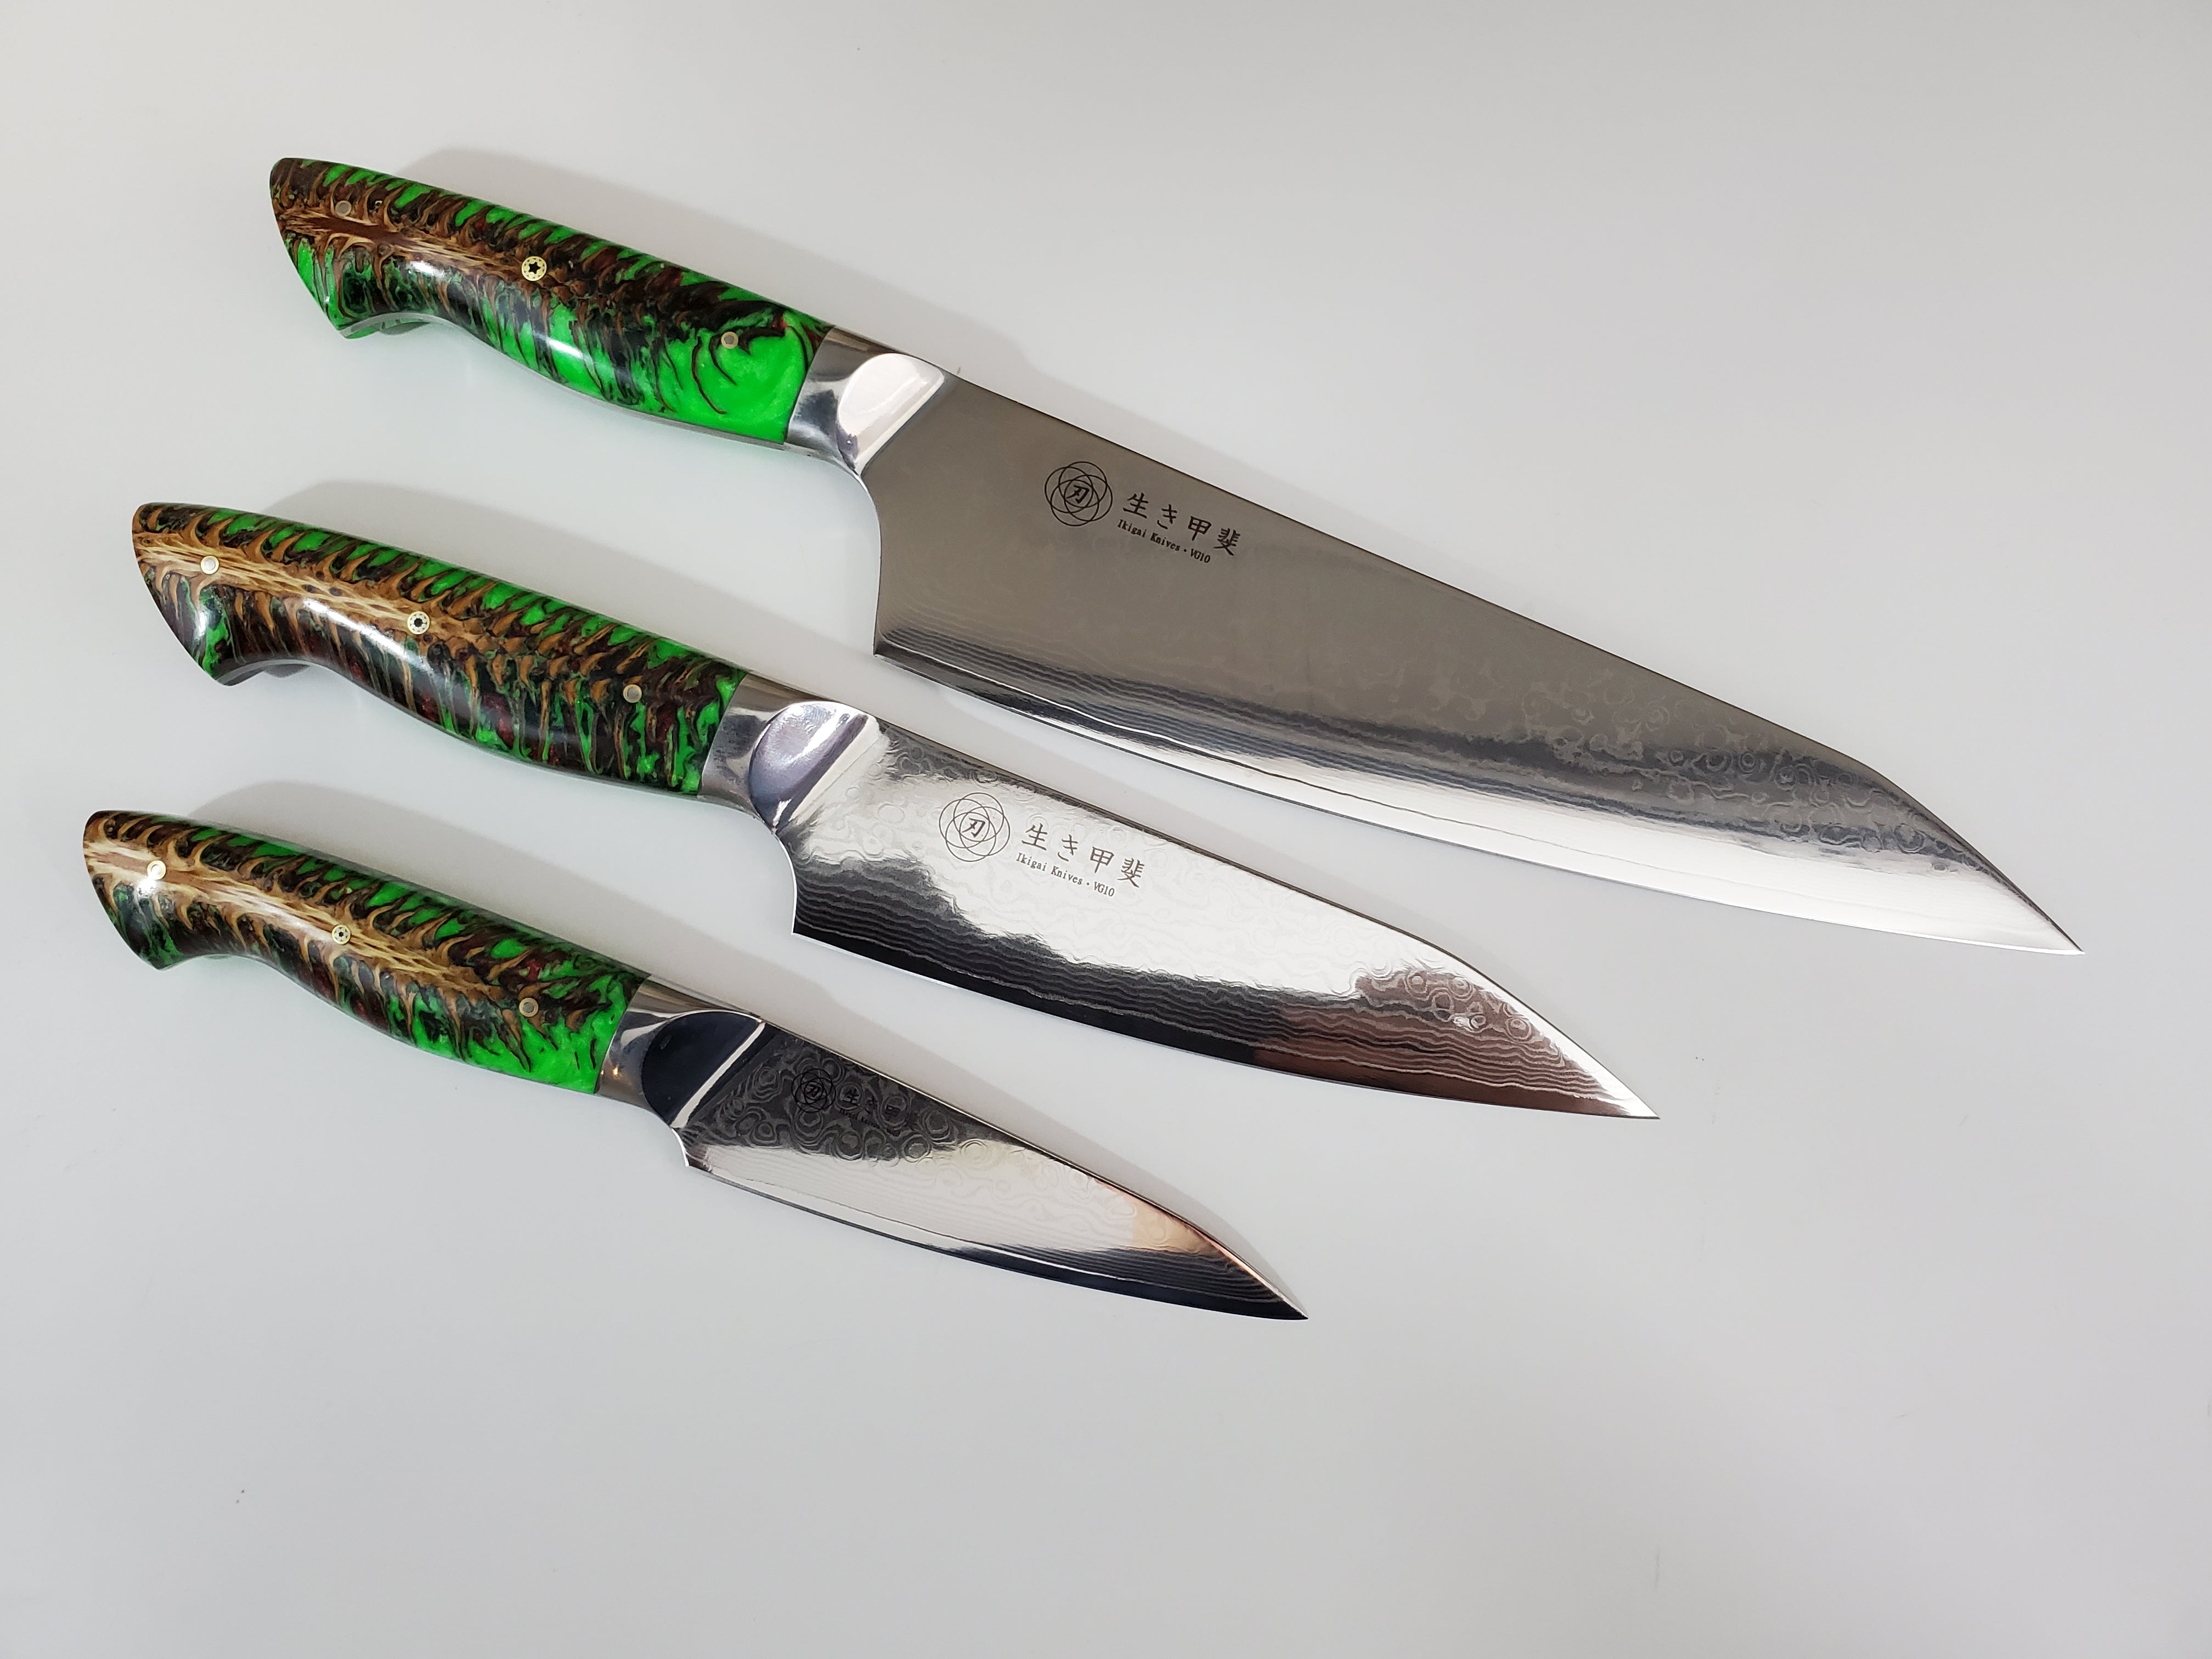 VG10 Damascus Chef knife set - 3pc  (paring)